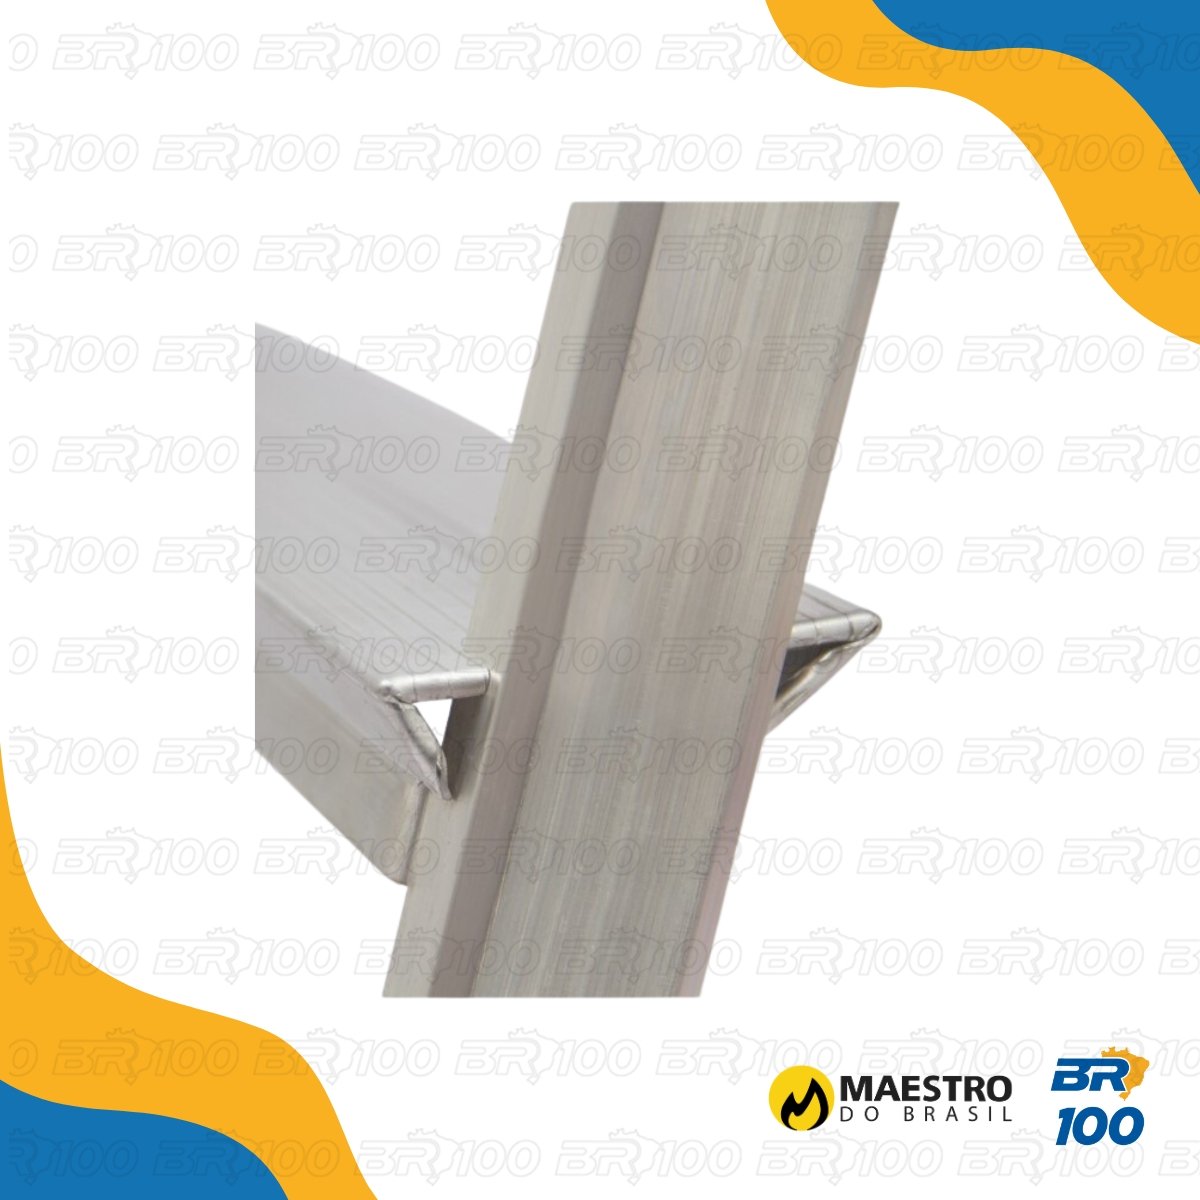 Escada Aluminio 5 Degraus Maestro - 5